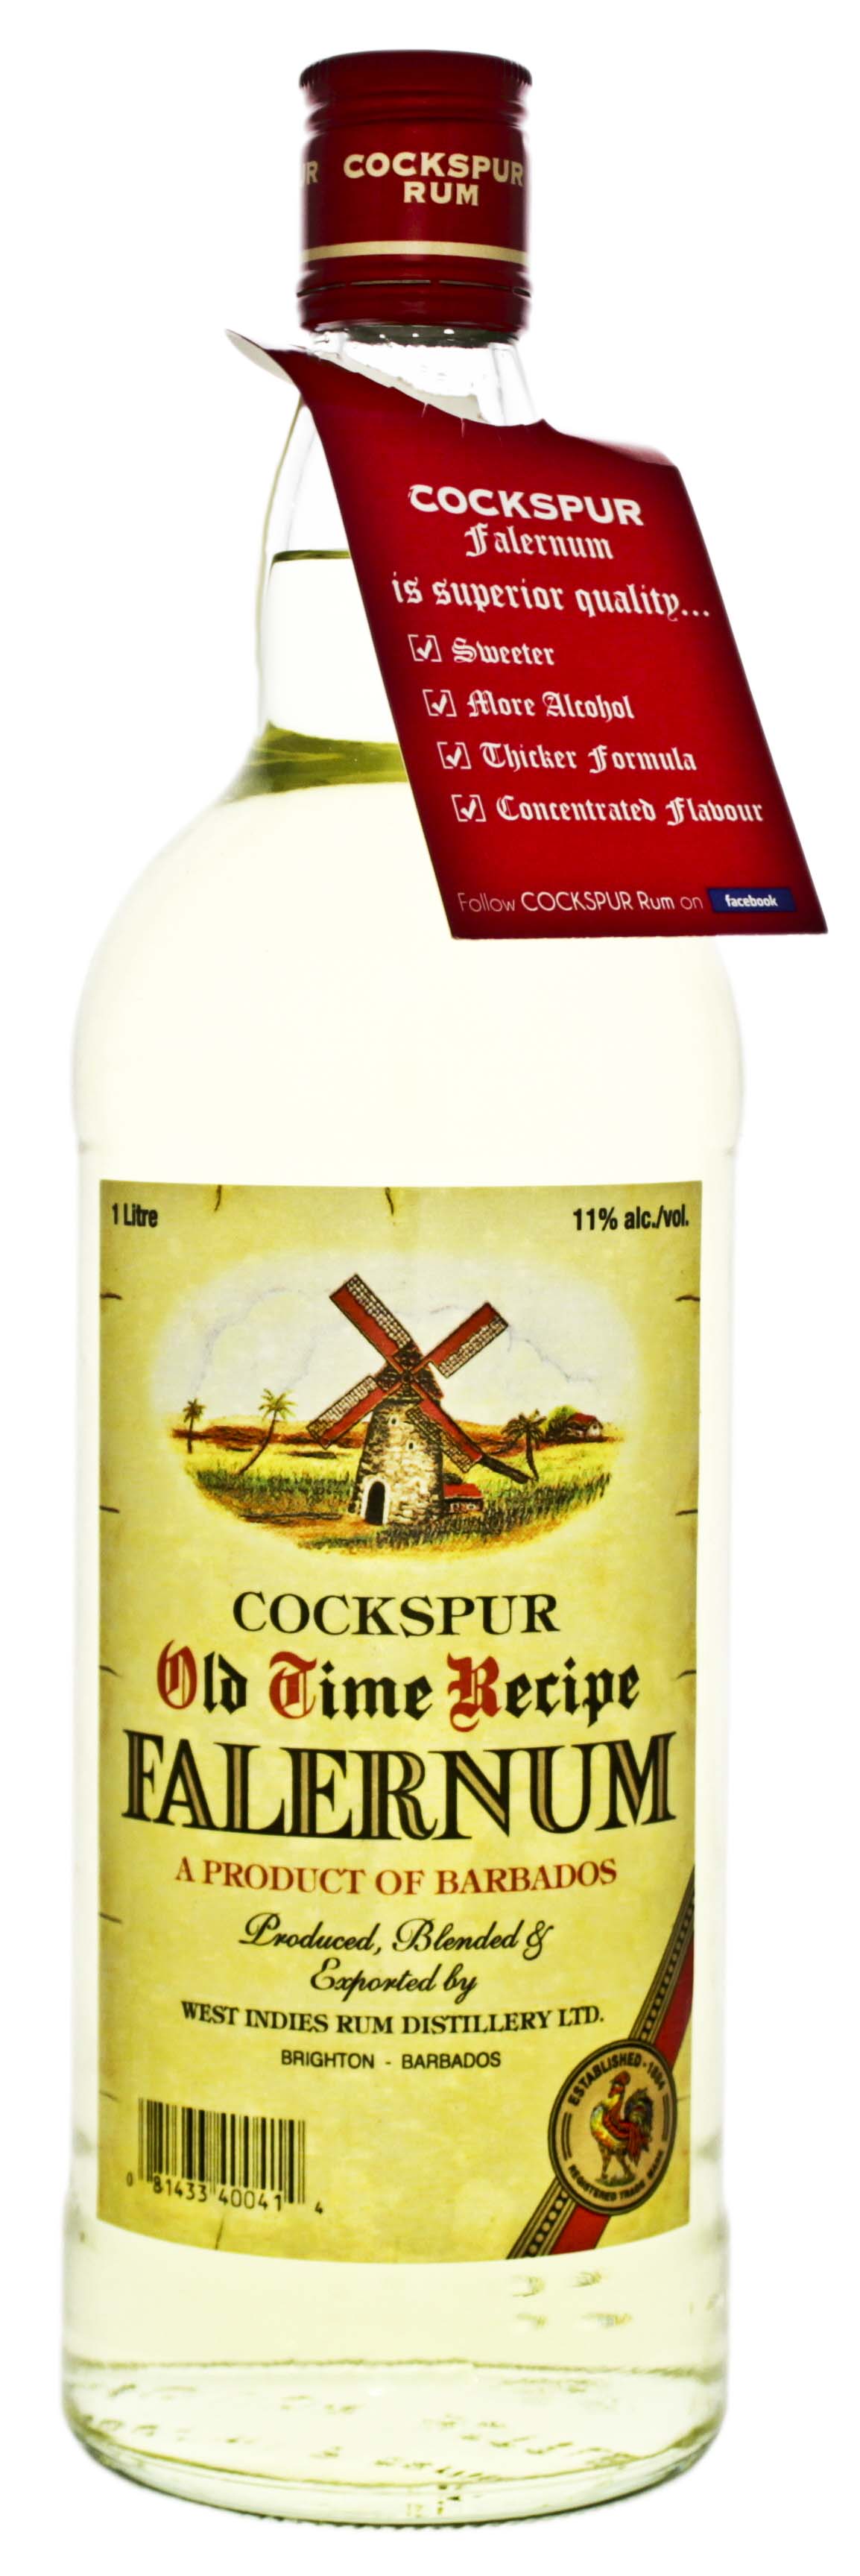 Cockspur Old Time Recipe Falernum 1,0L